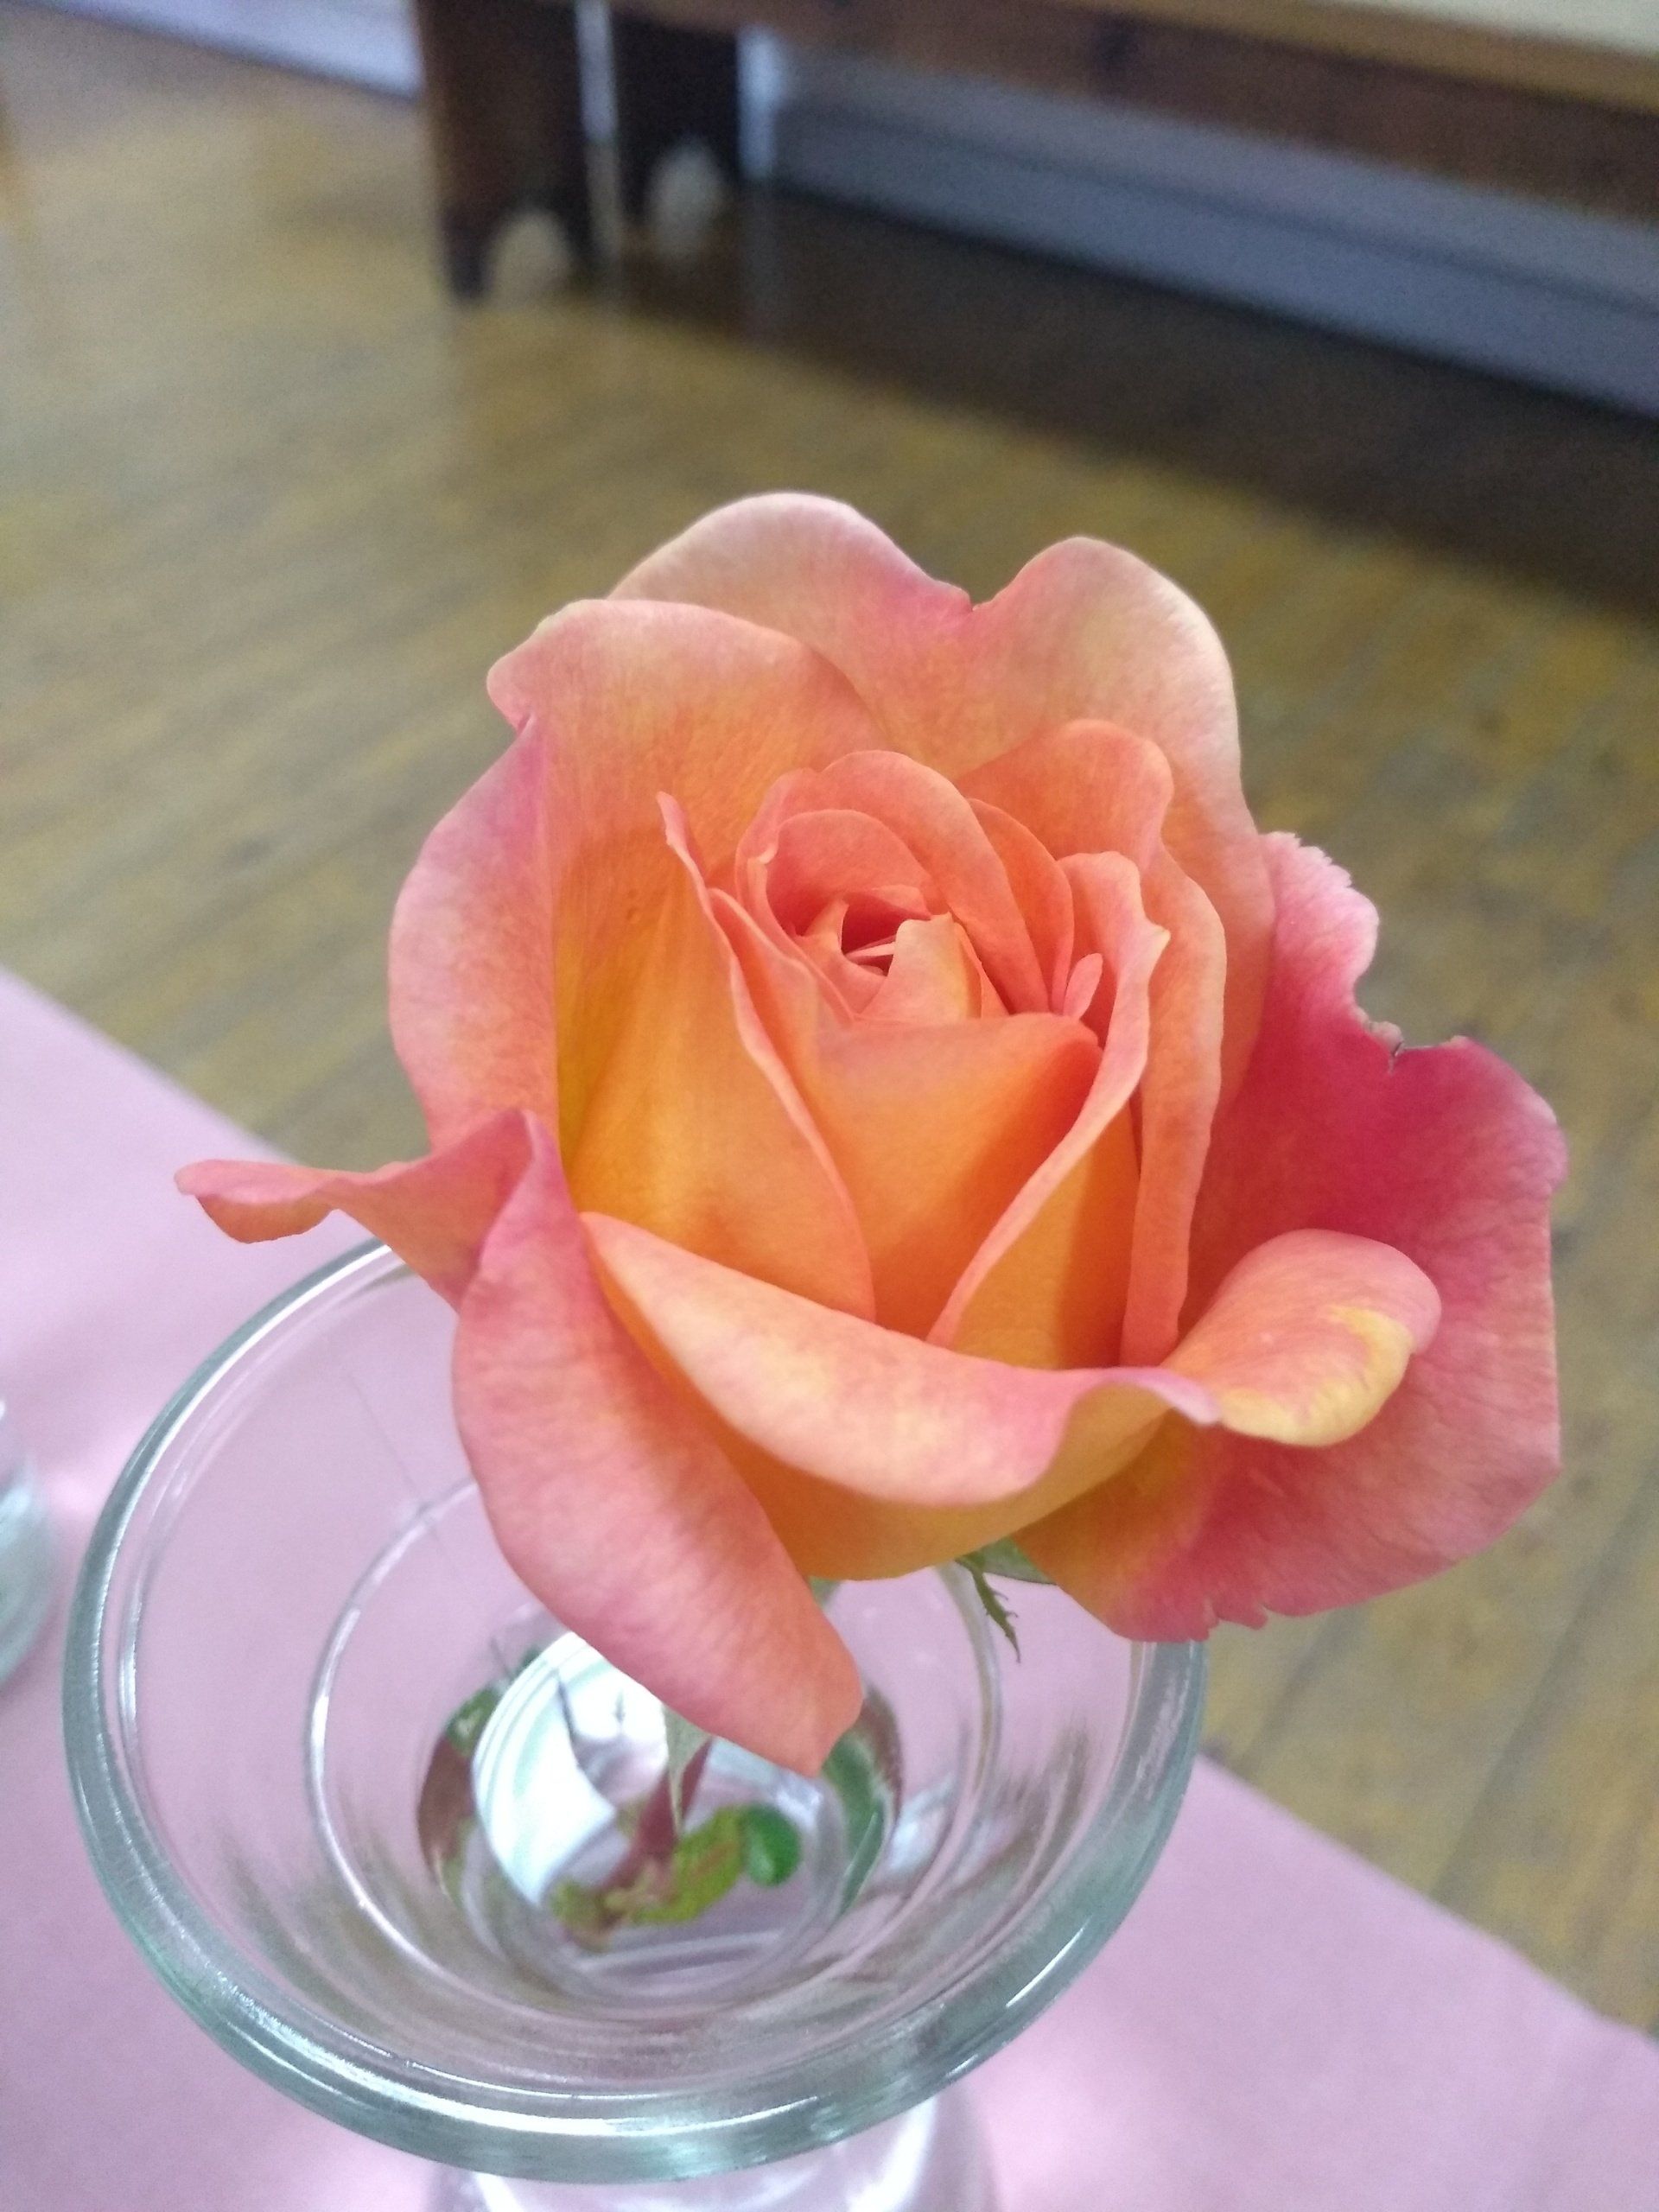 Rose 11 classic form orangey pink